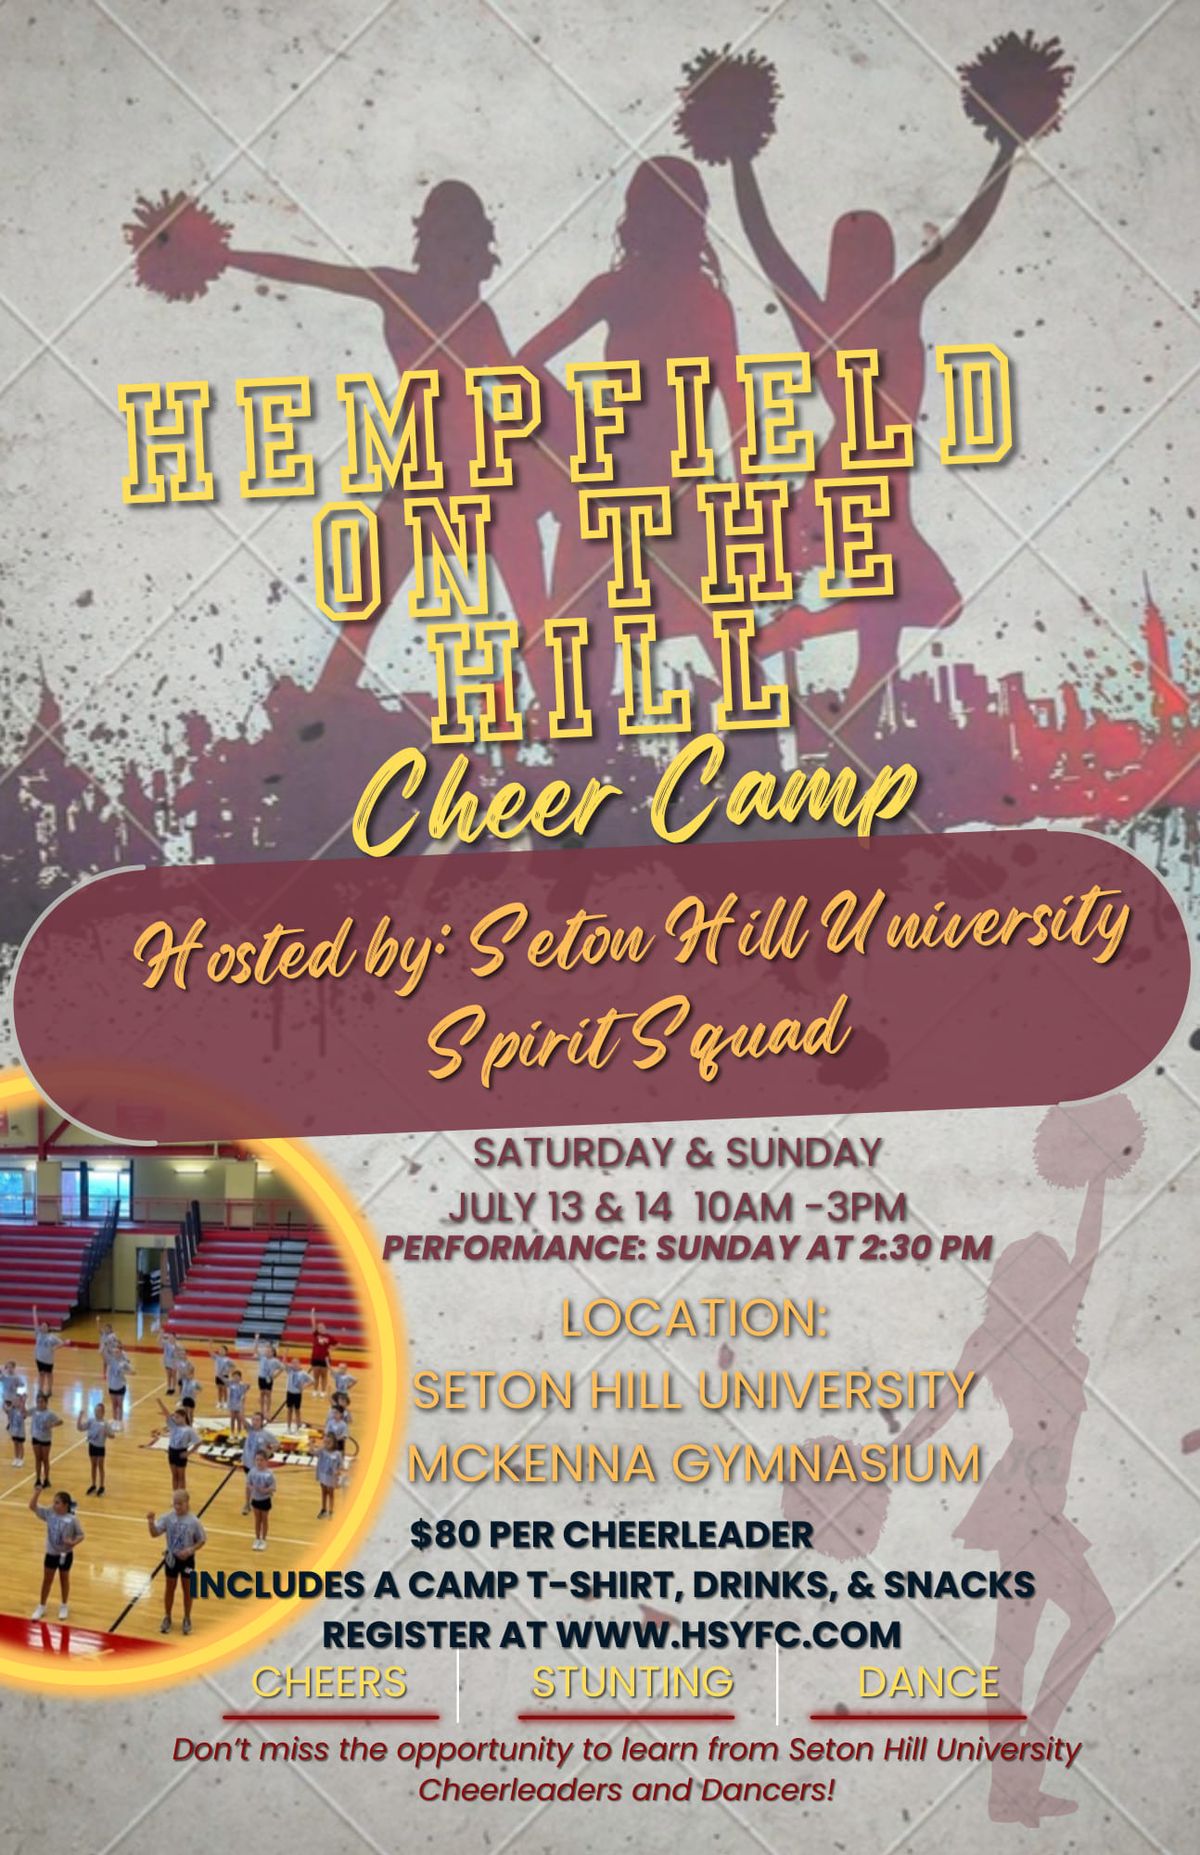 Hempfield on the Hill Cheer Camp